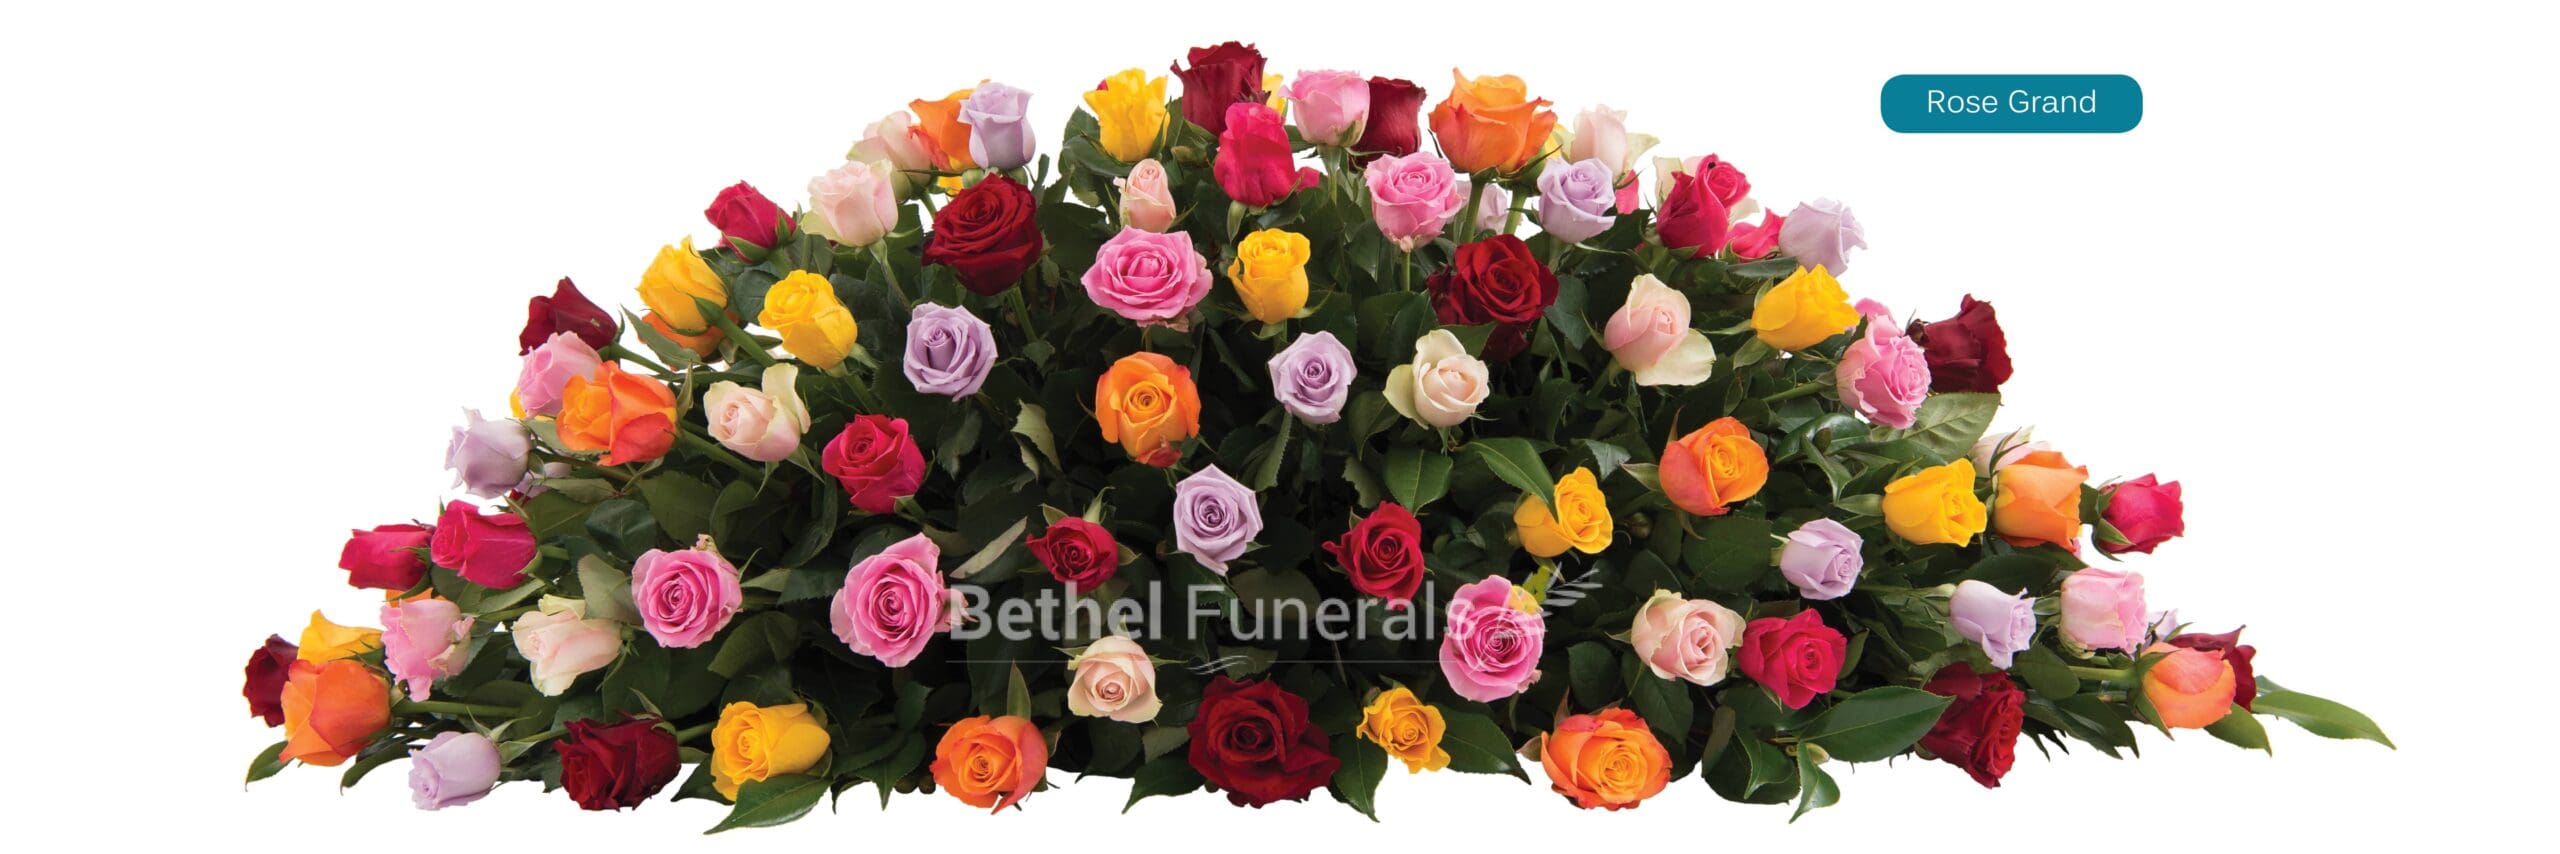 rose grand funeral flowers